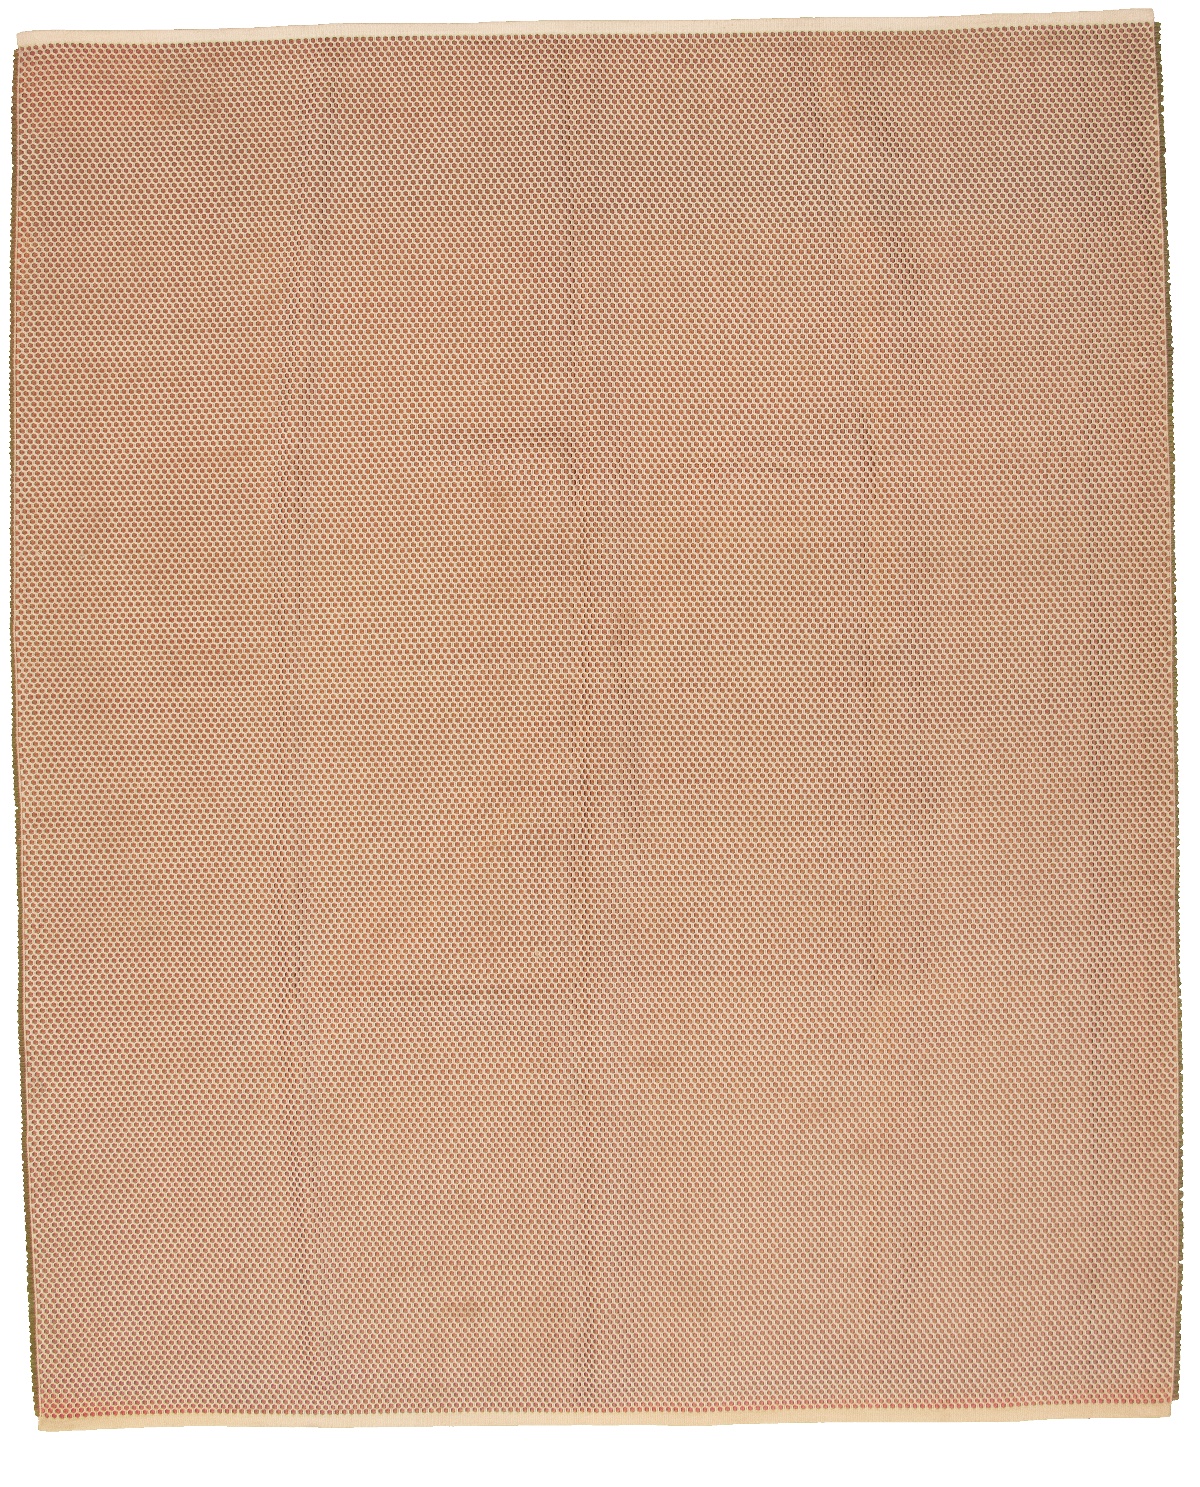 Handmade Honeycomb III Dark Copper Cotton/Polyester Rug 8'2" x 8'4" Size: 8'2" x 8'4"  